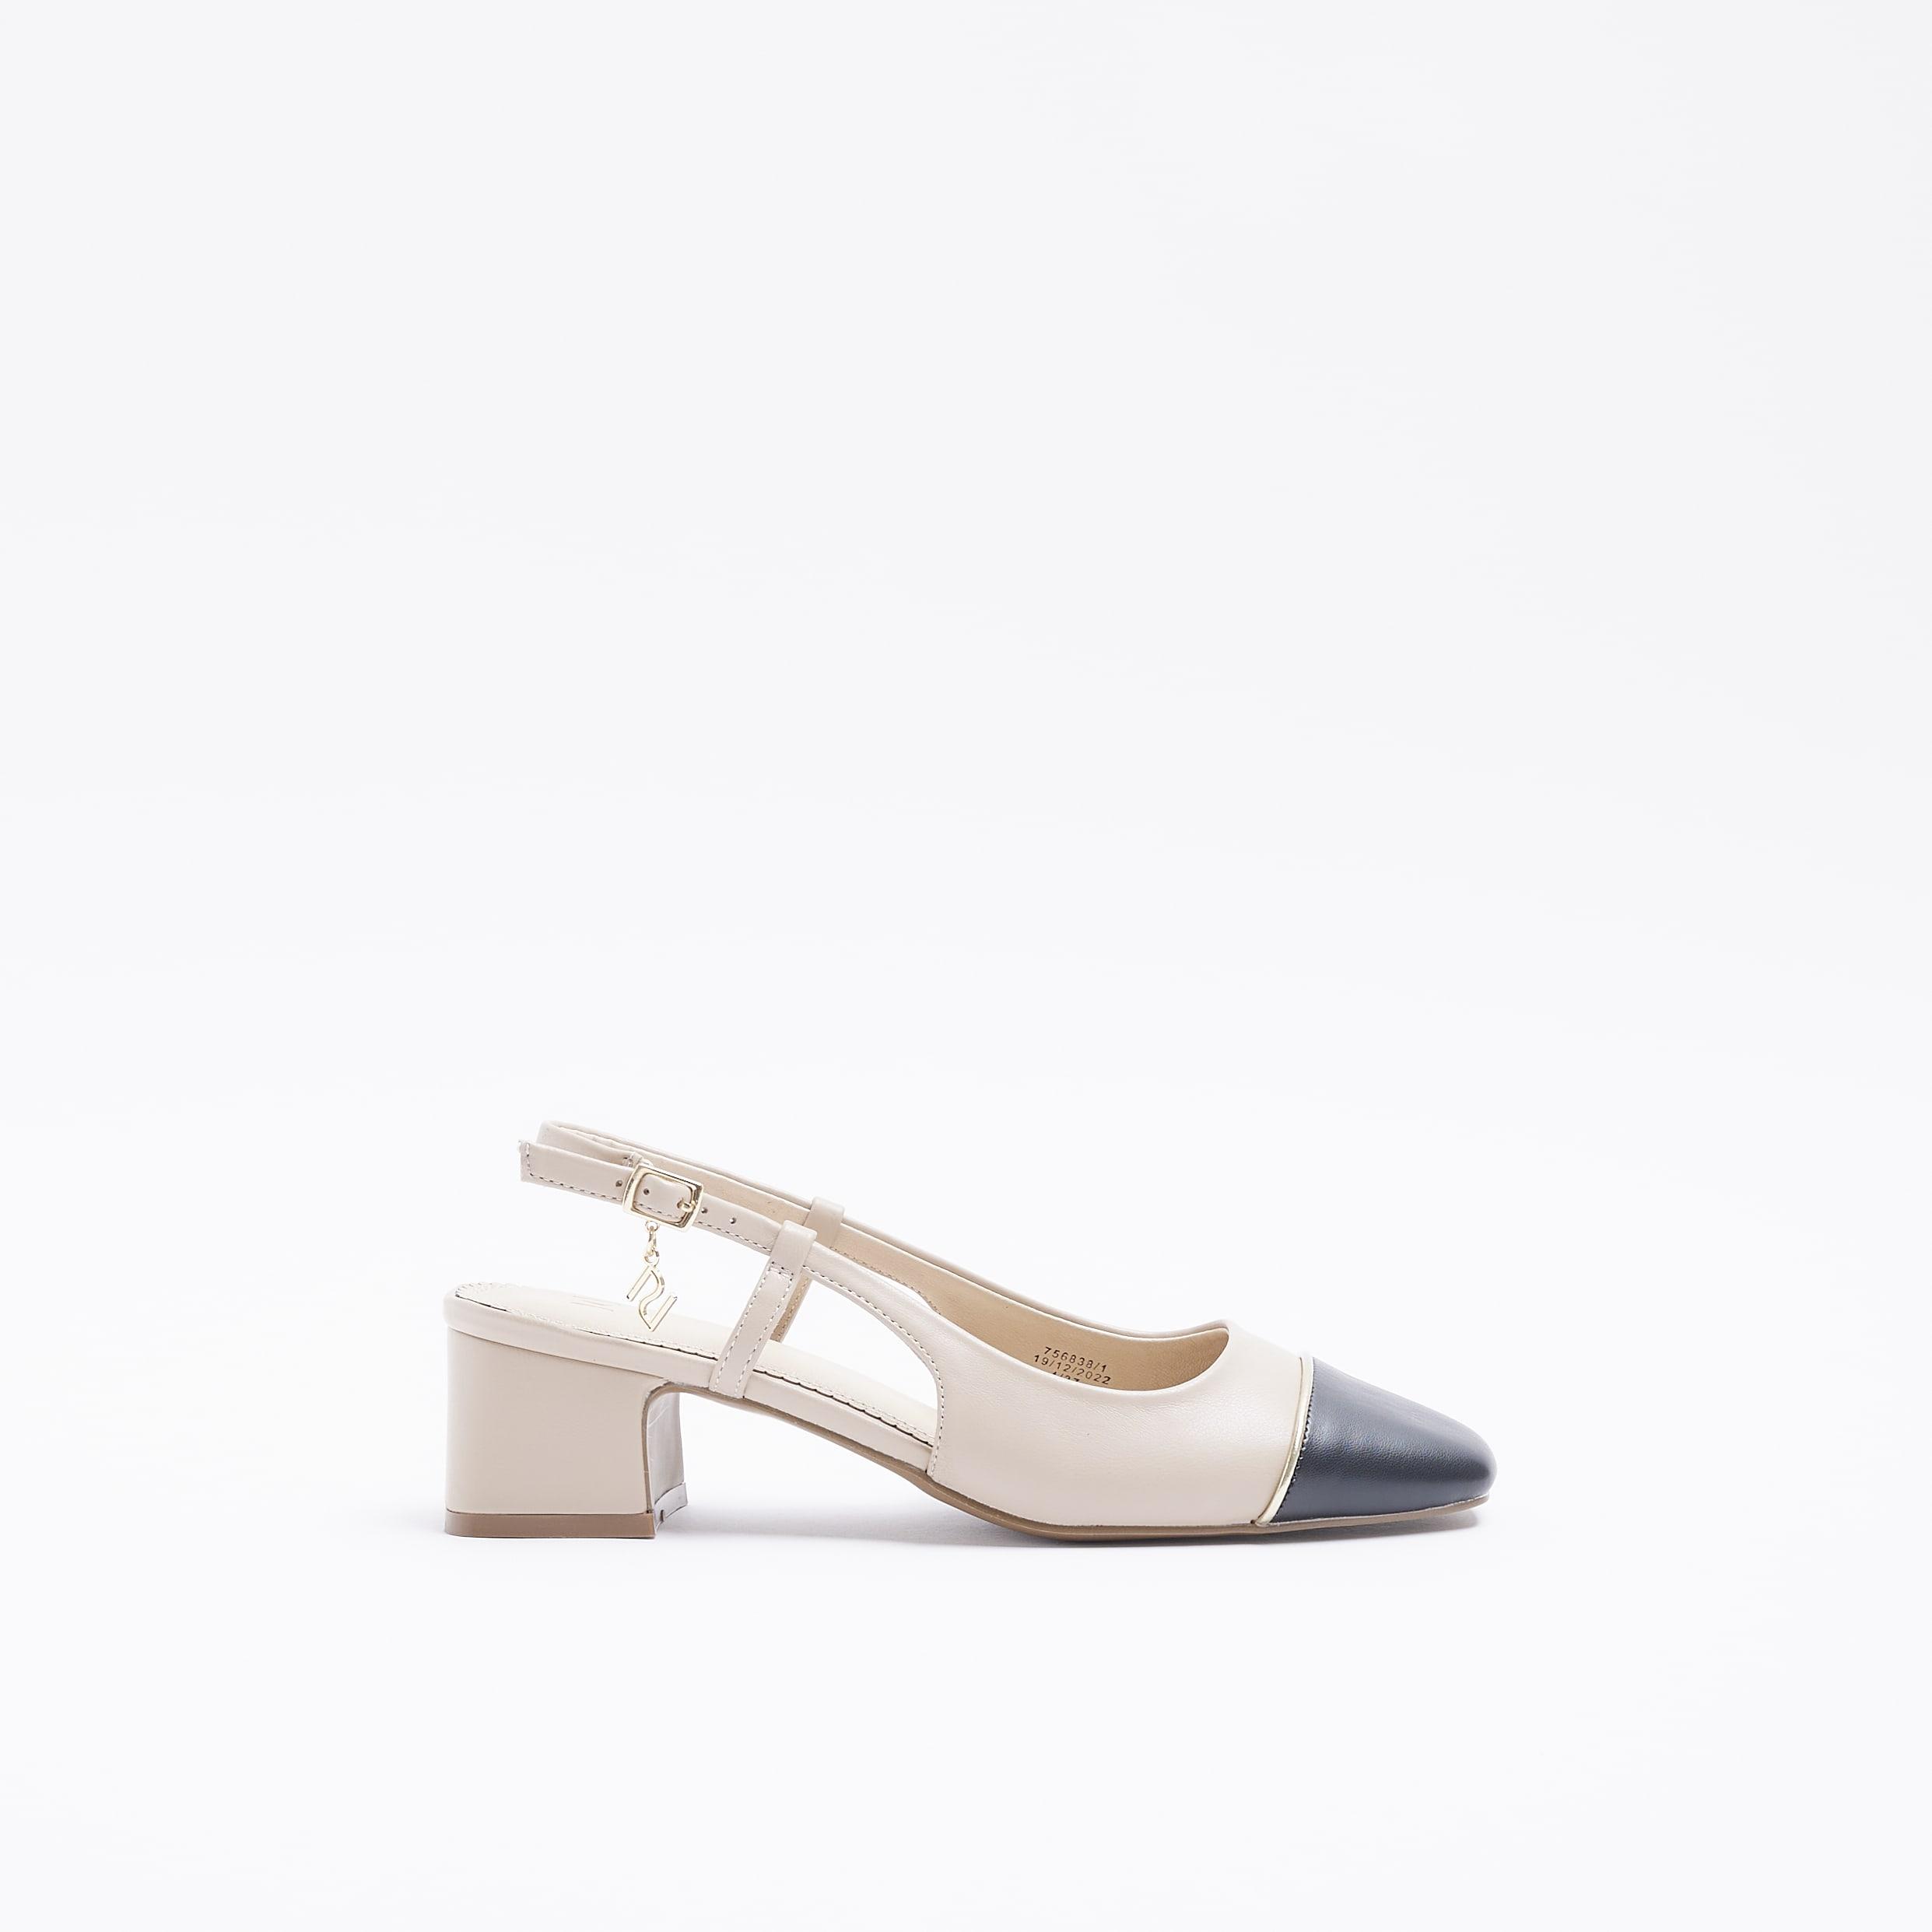 River Island selling £33 slingback heels that look exactly like